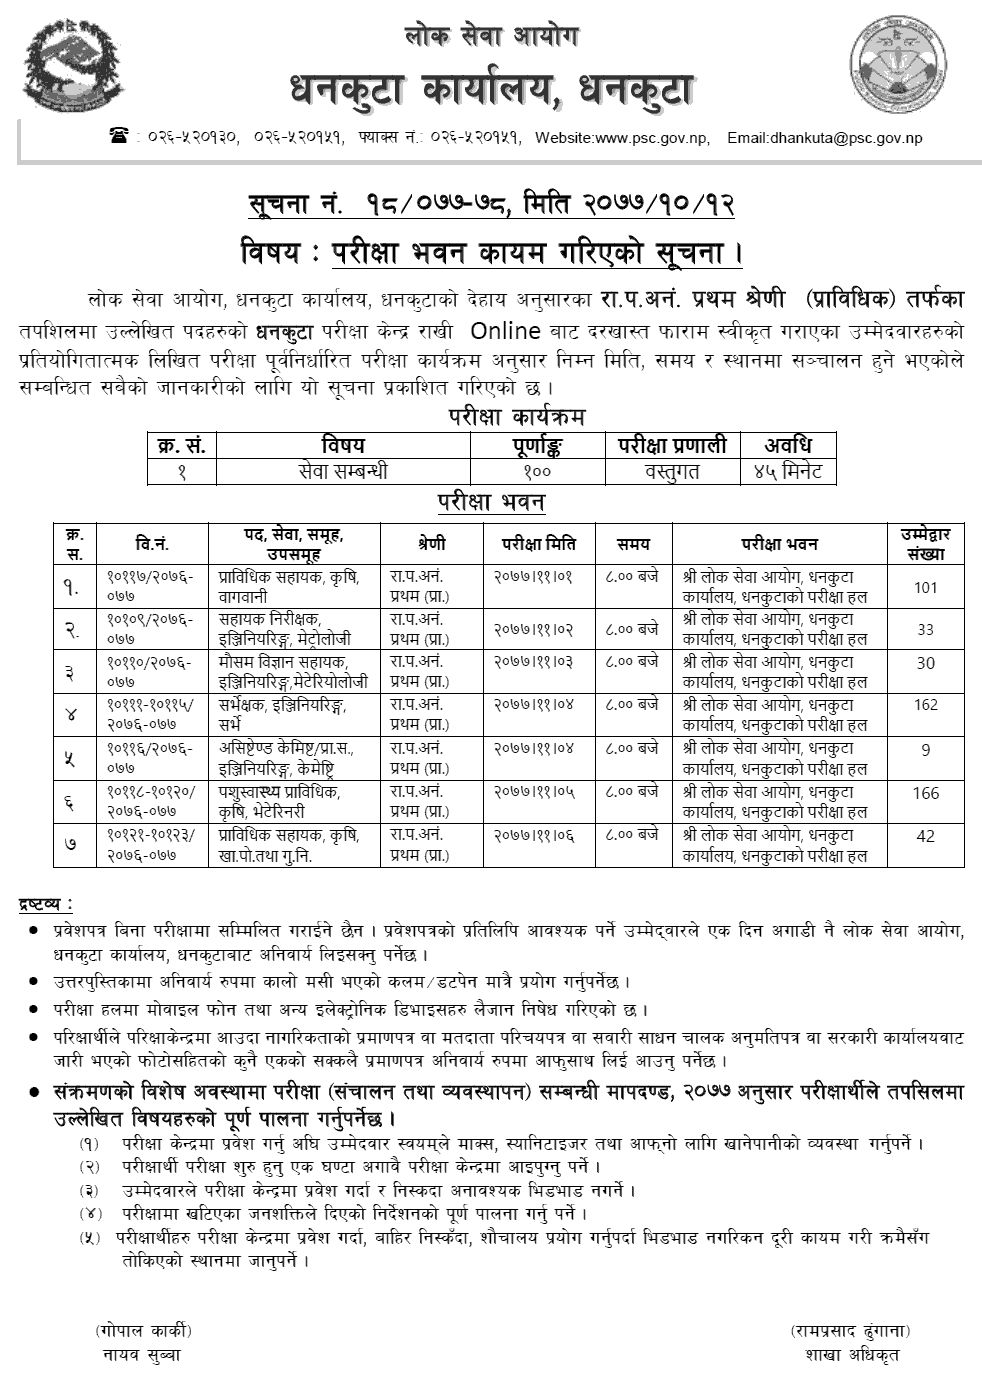 Nayab Subba (Technical) Written Exam Center Dhankuta - Lok Sewa Aayog